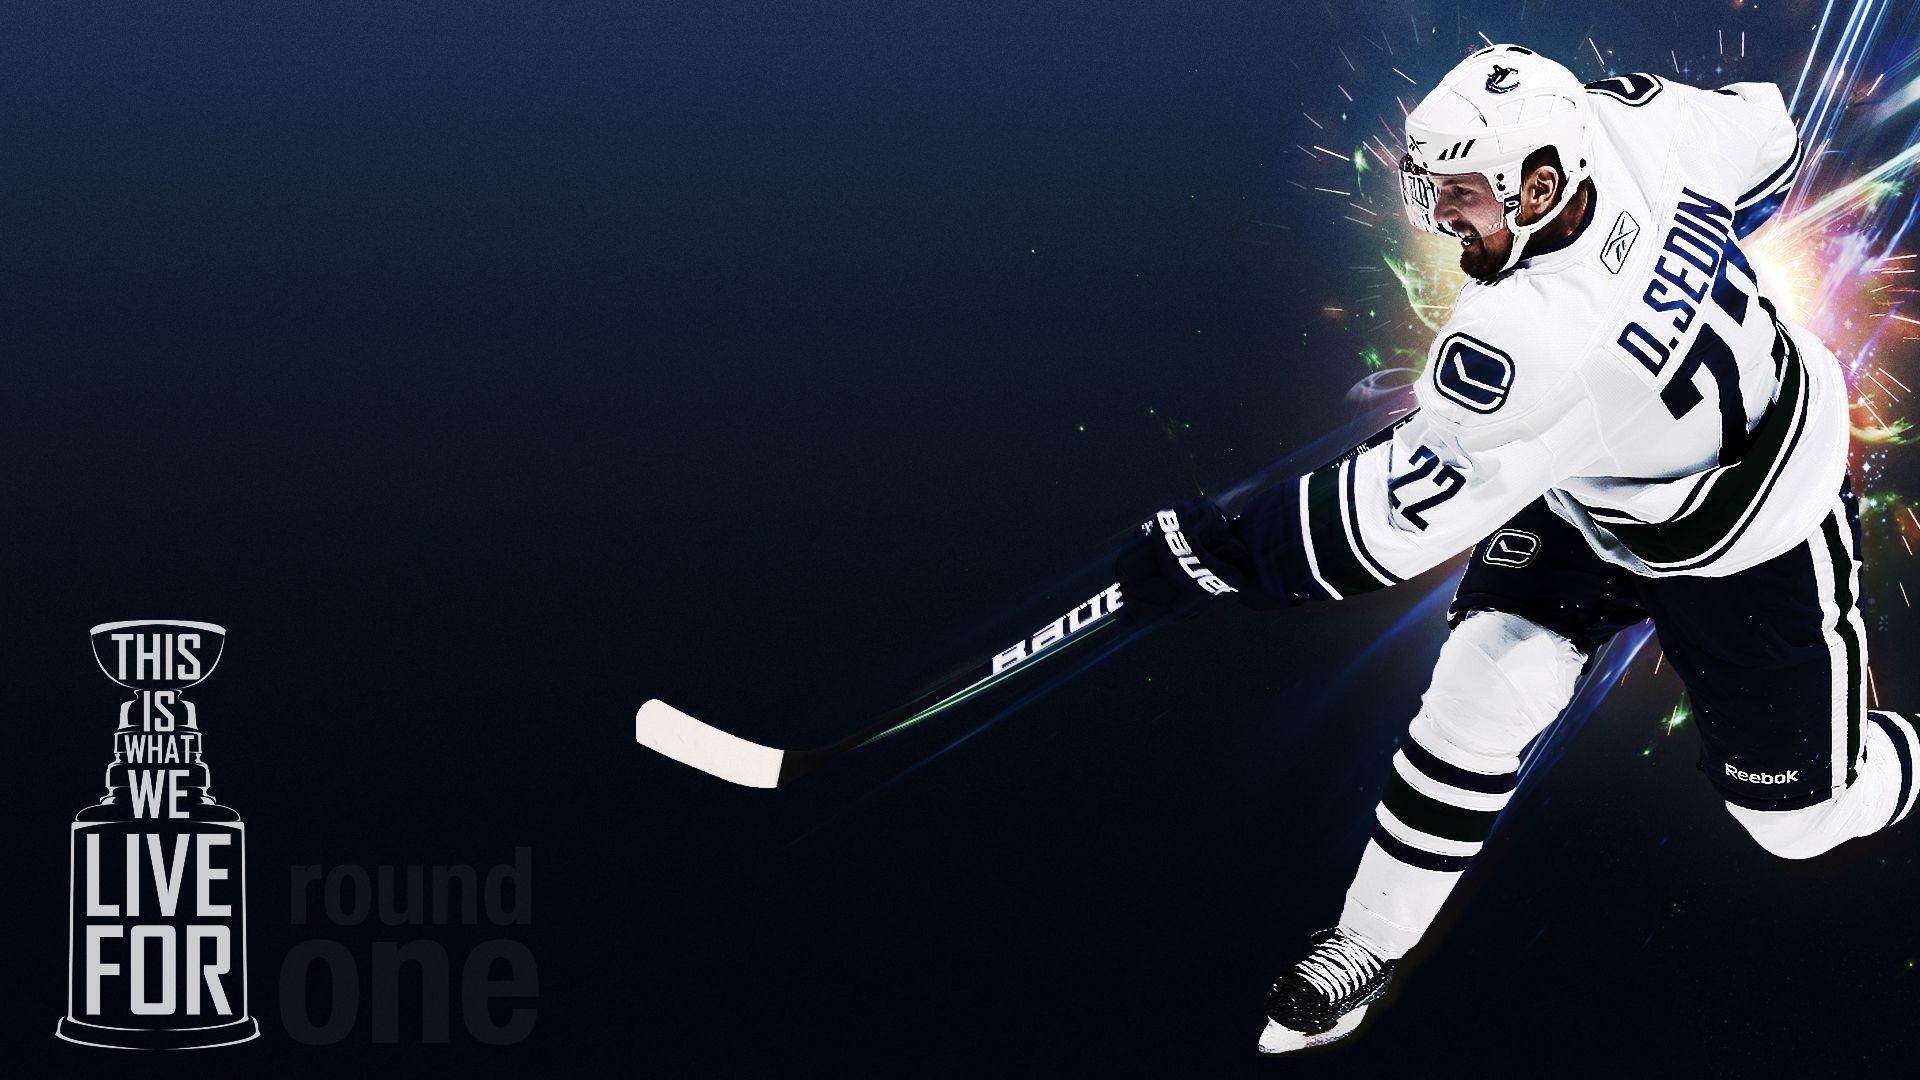 Best Hockey player of Vancouver Henrik Sedin wallpaper and image